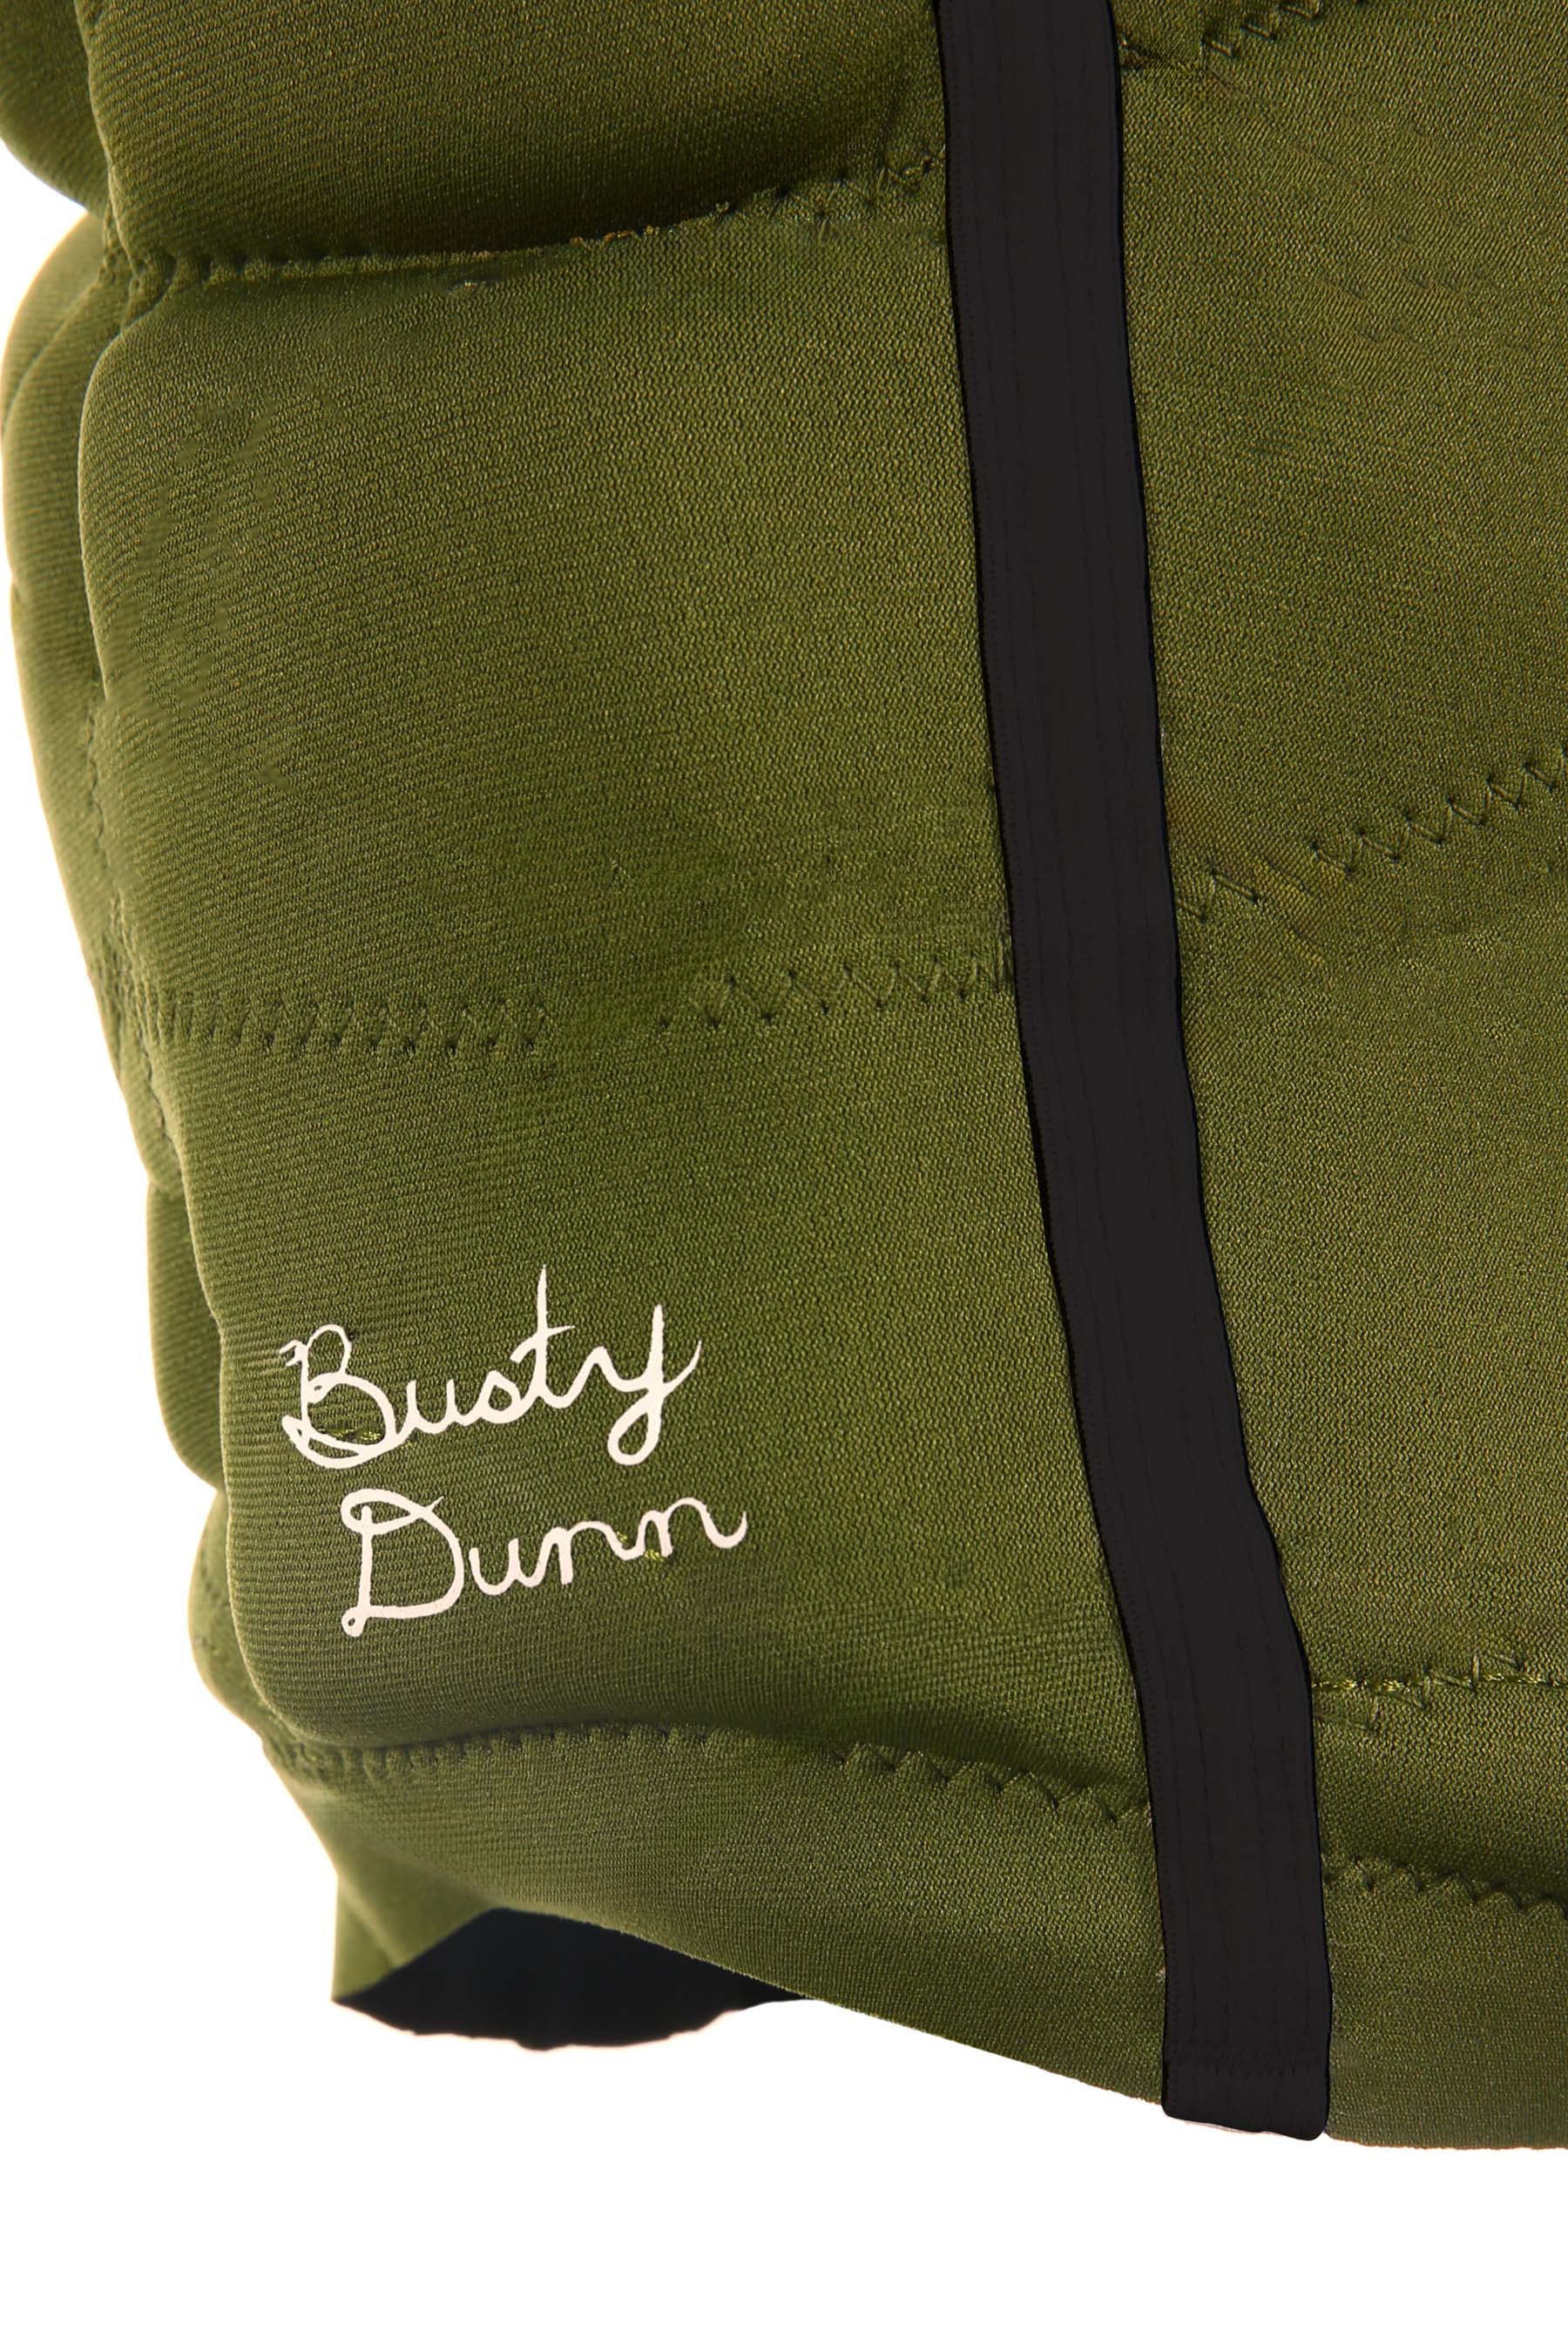 Jetpilot X1 - Busty Dunn Signature Series Mens Life Jacket - Sage